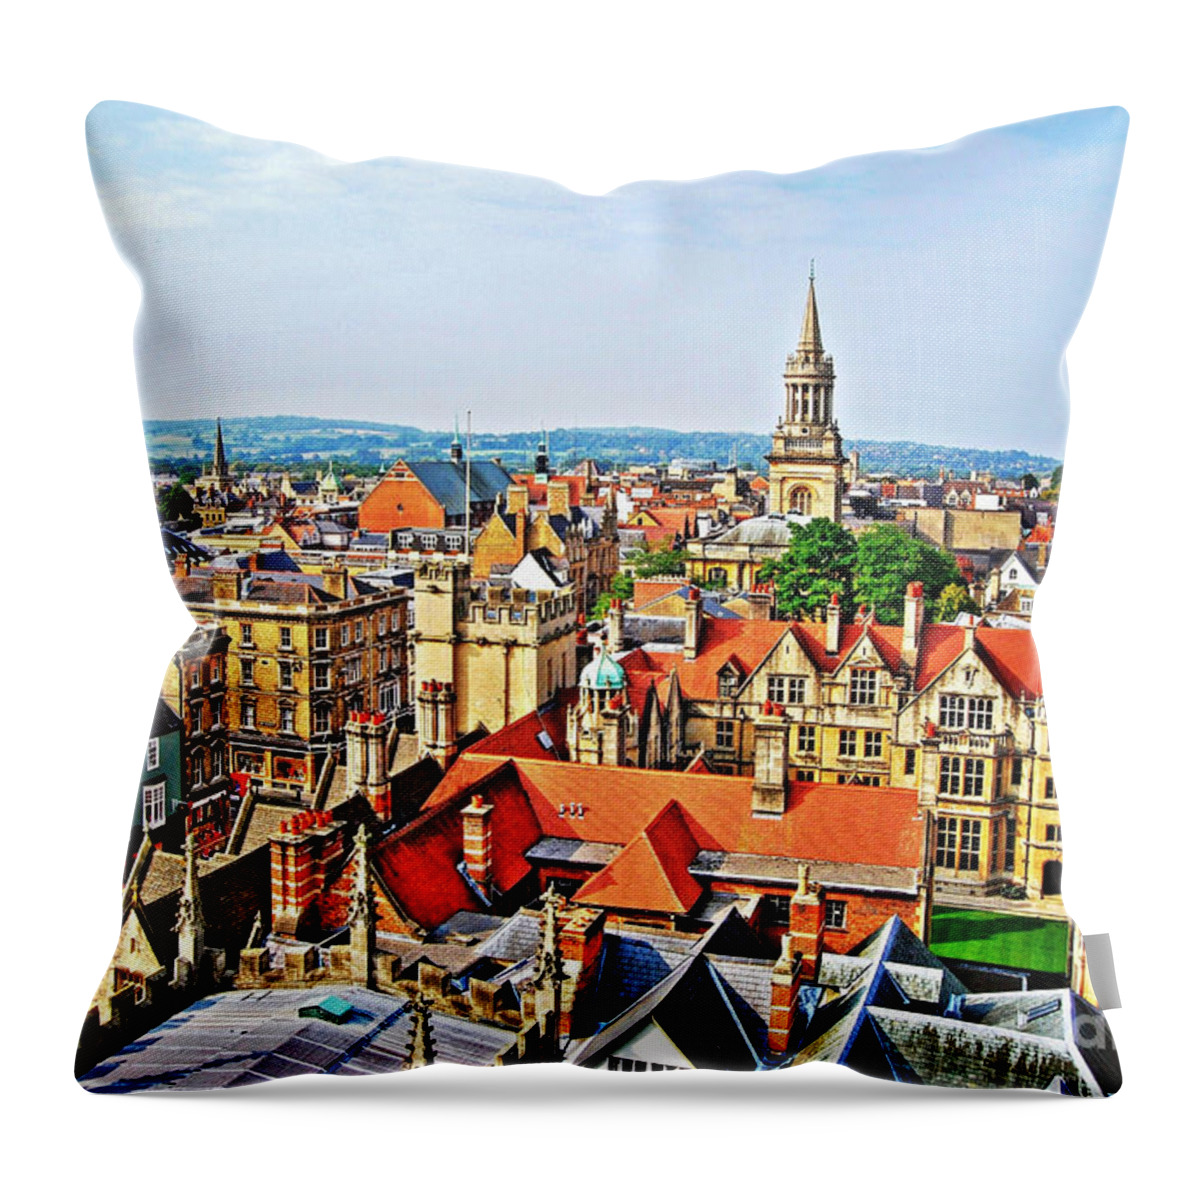 Yhun Suarez Throw Pillow featuring the photograph Oxford Cityscape by Yhun Suarez